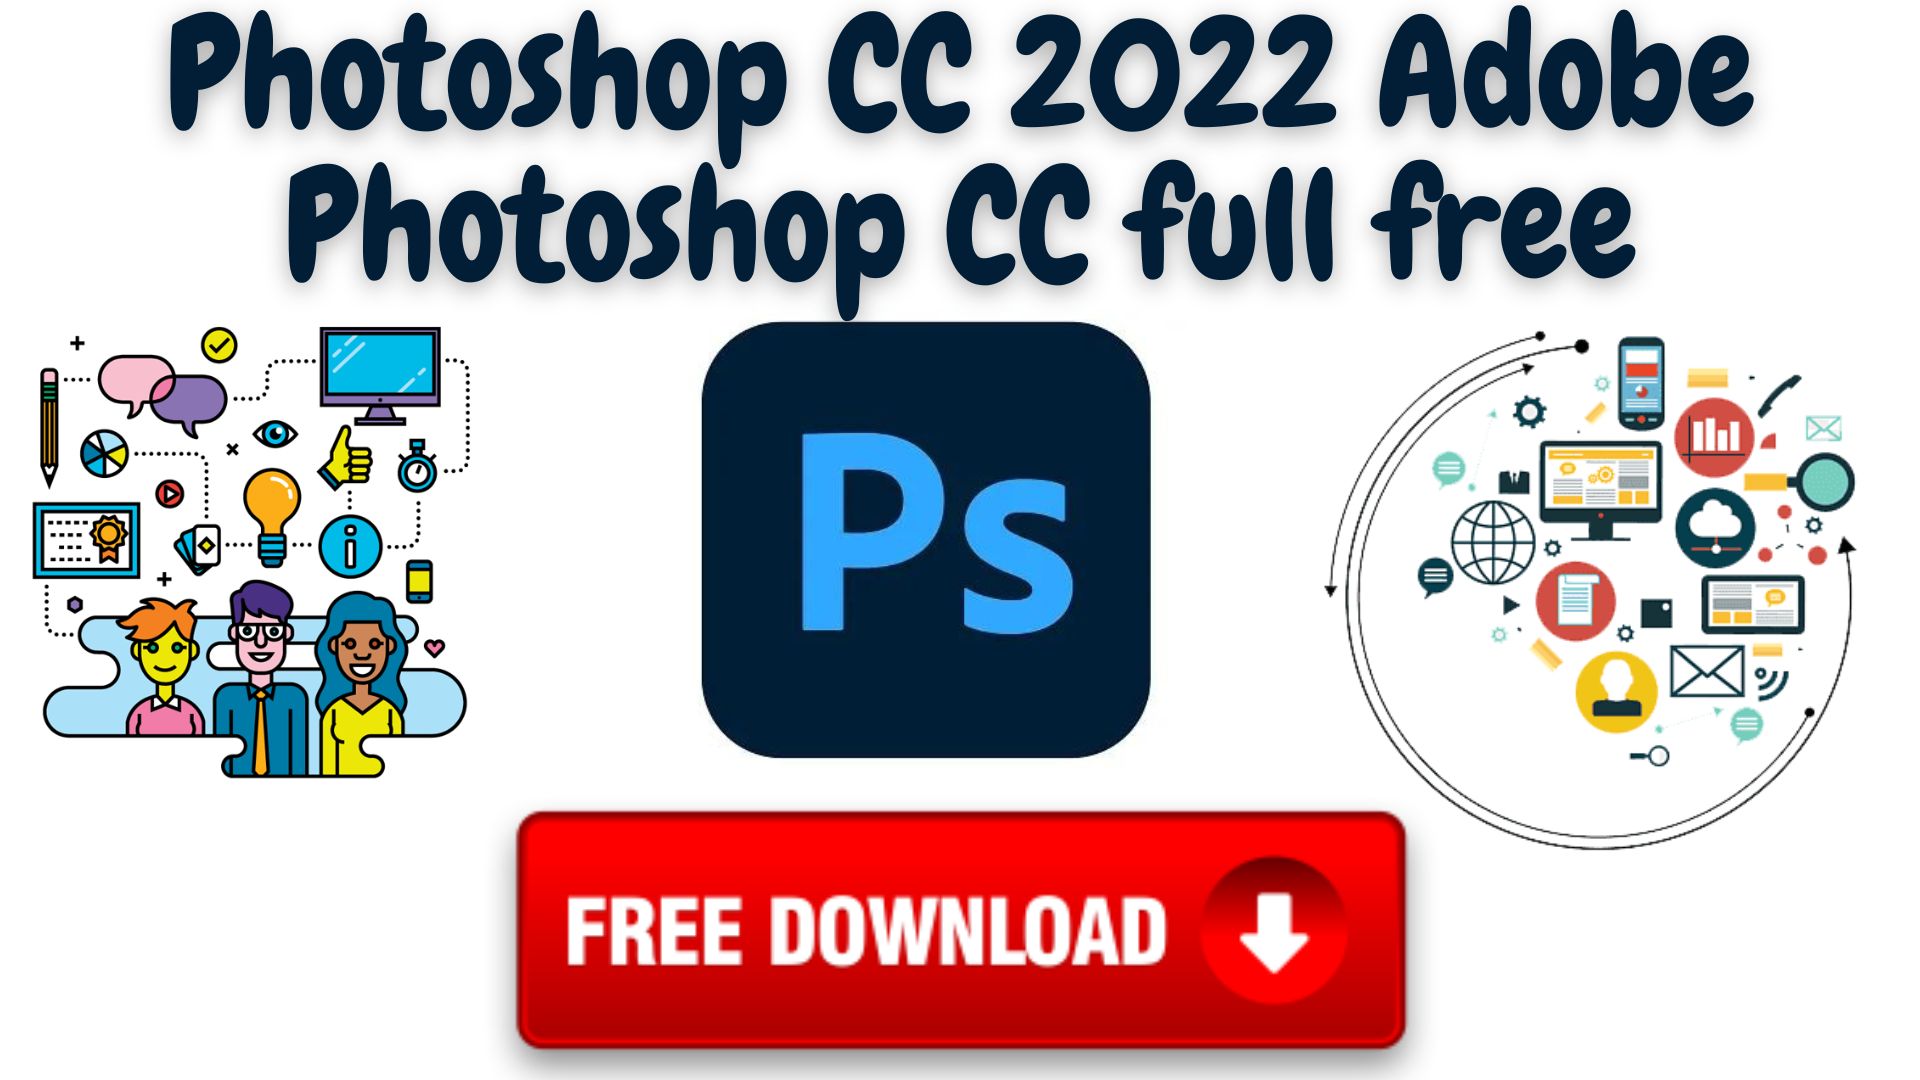 Photoshop Cc 2022 Adobe Photoshop Cc Full Free